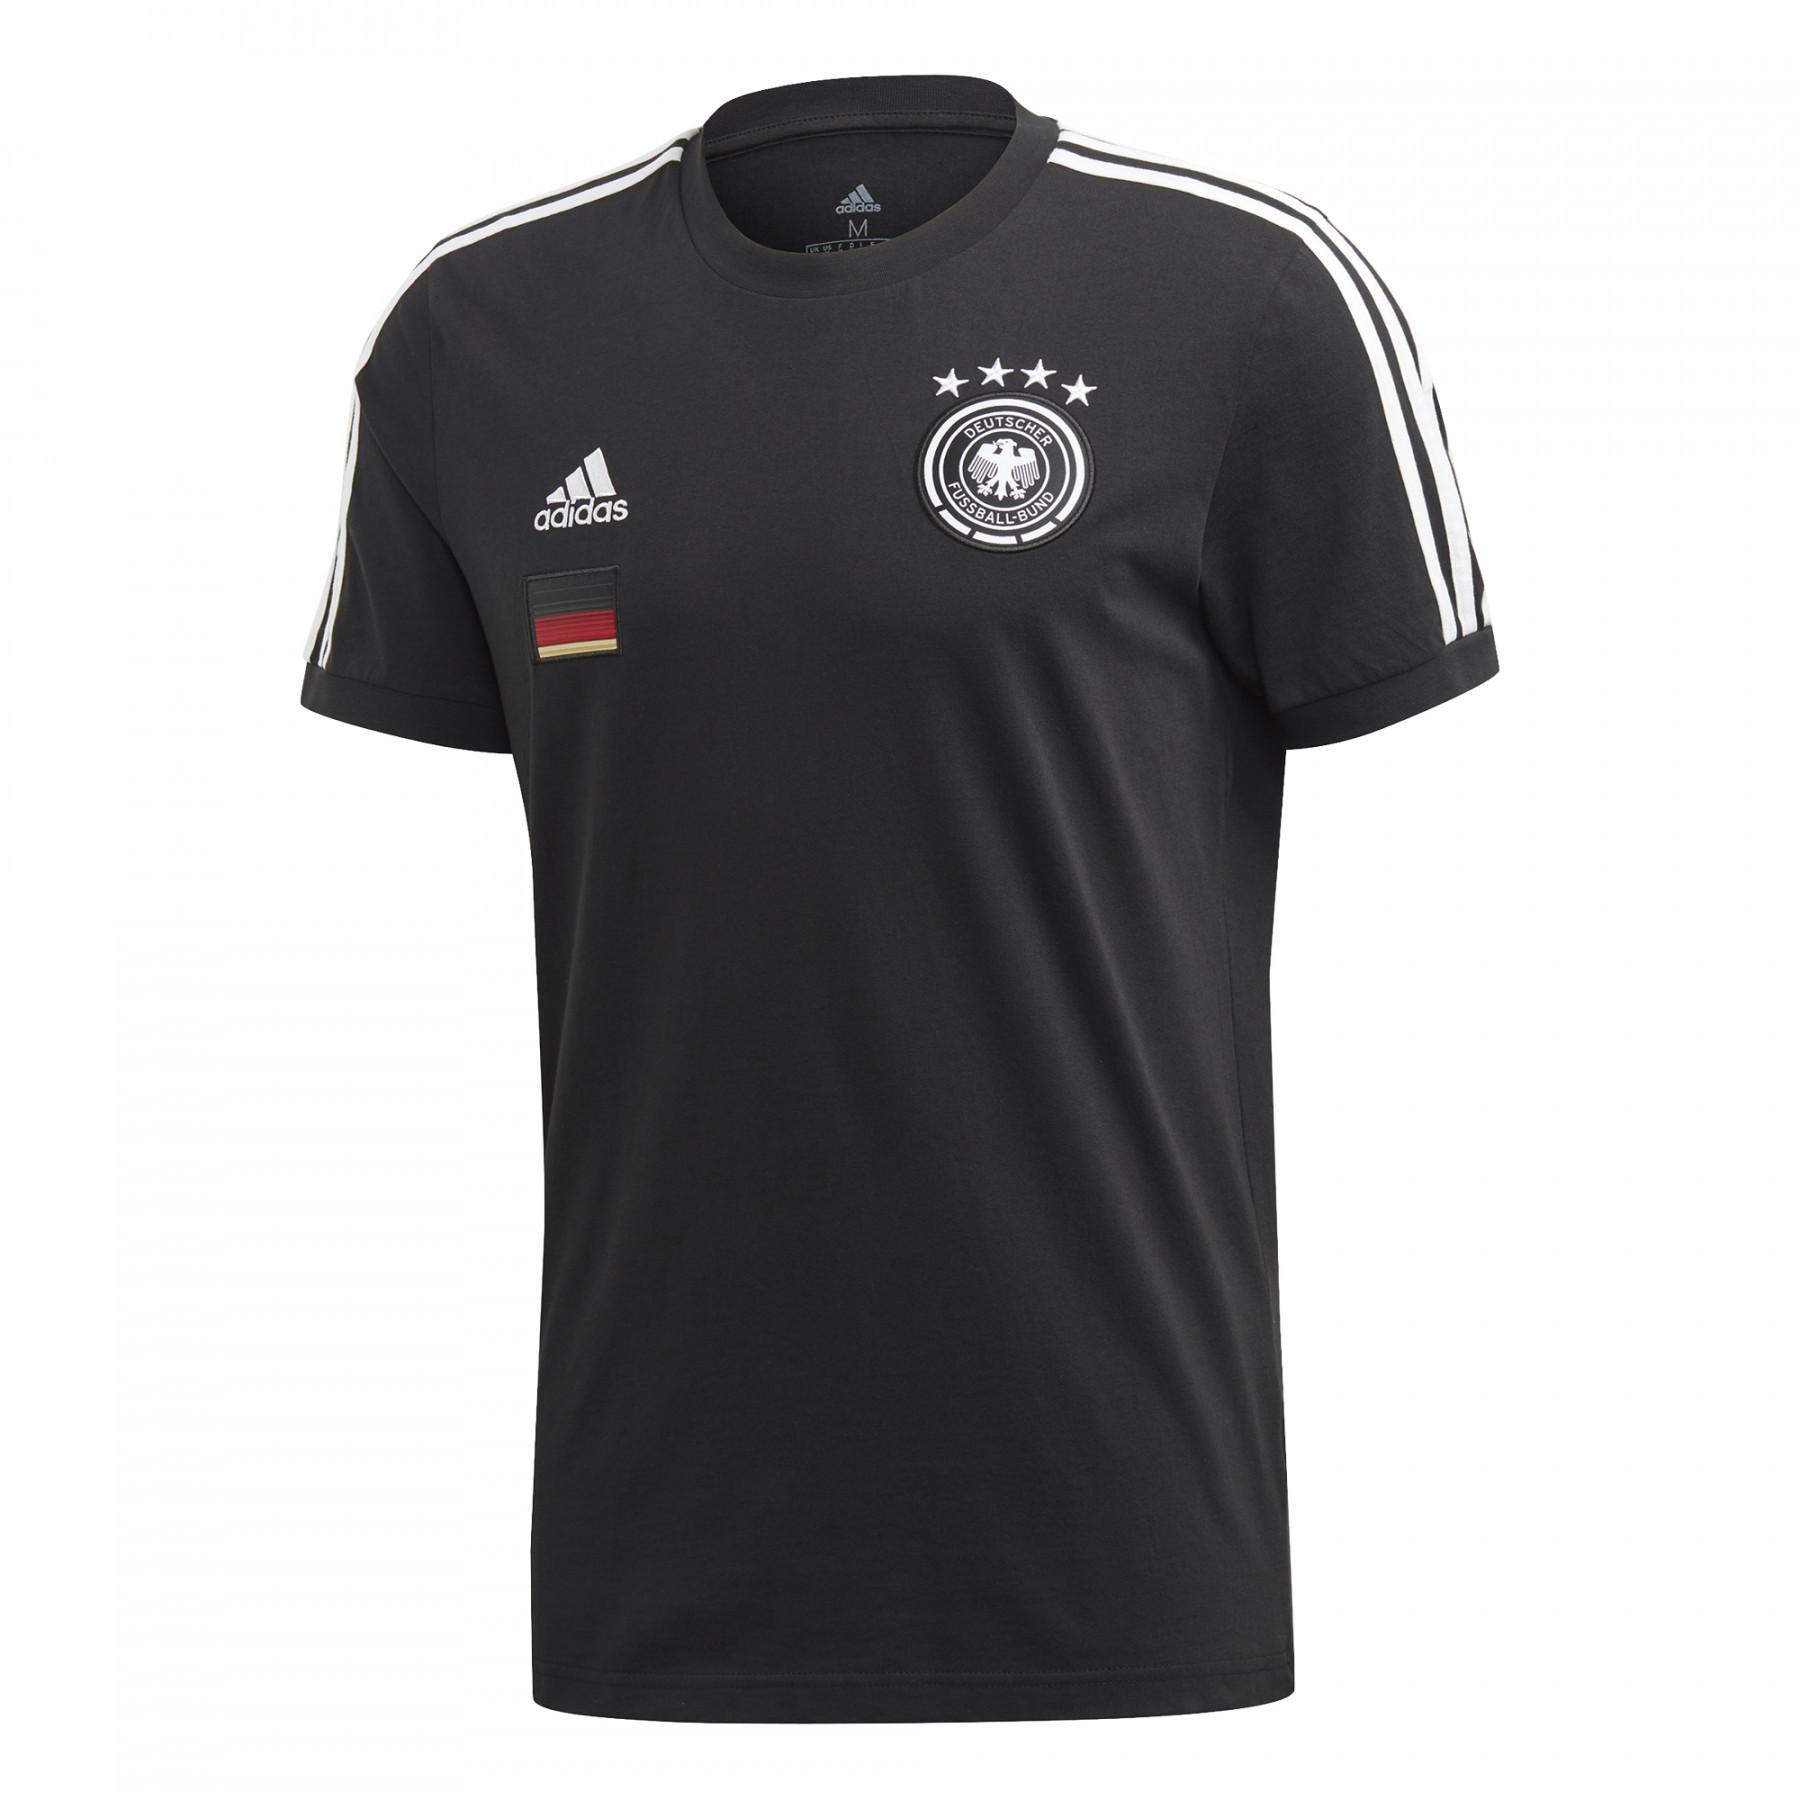 Koszulka Allemagne 3-Stripes 2020